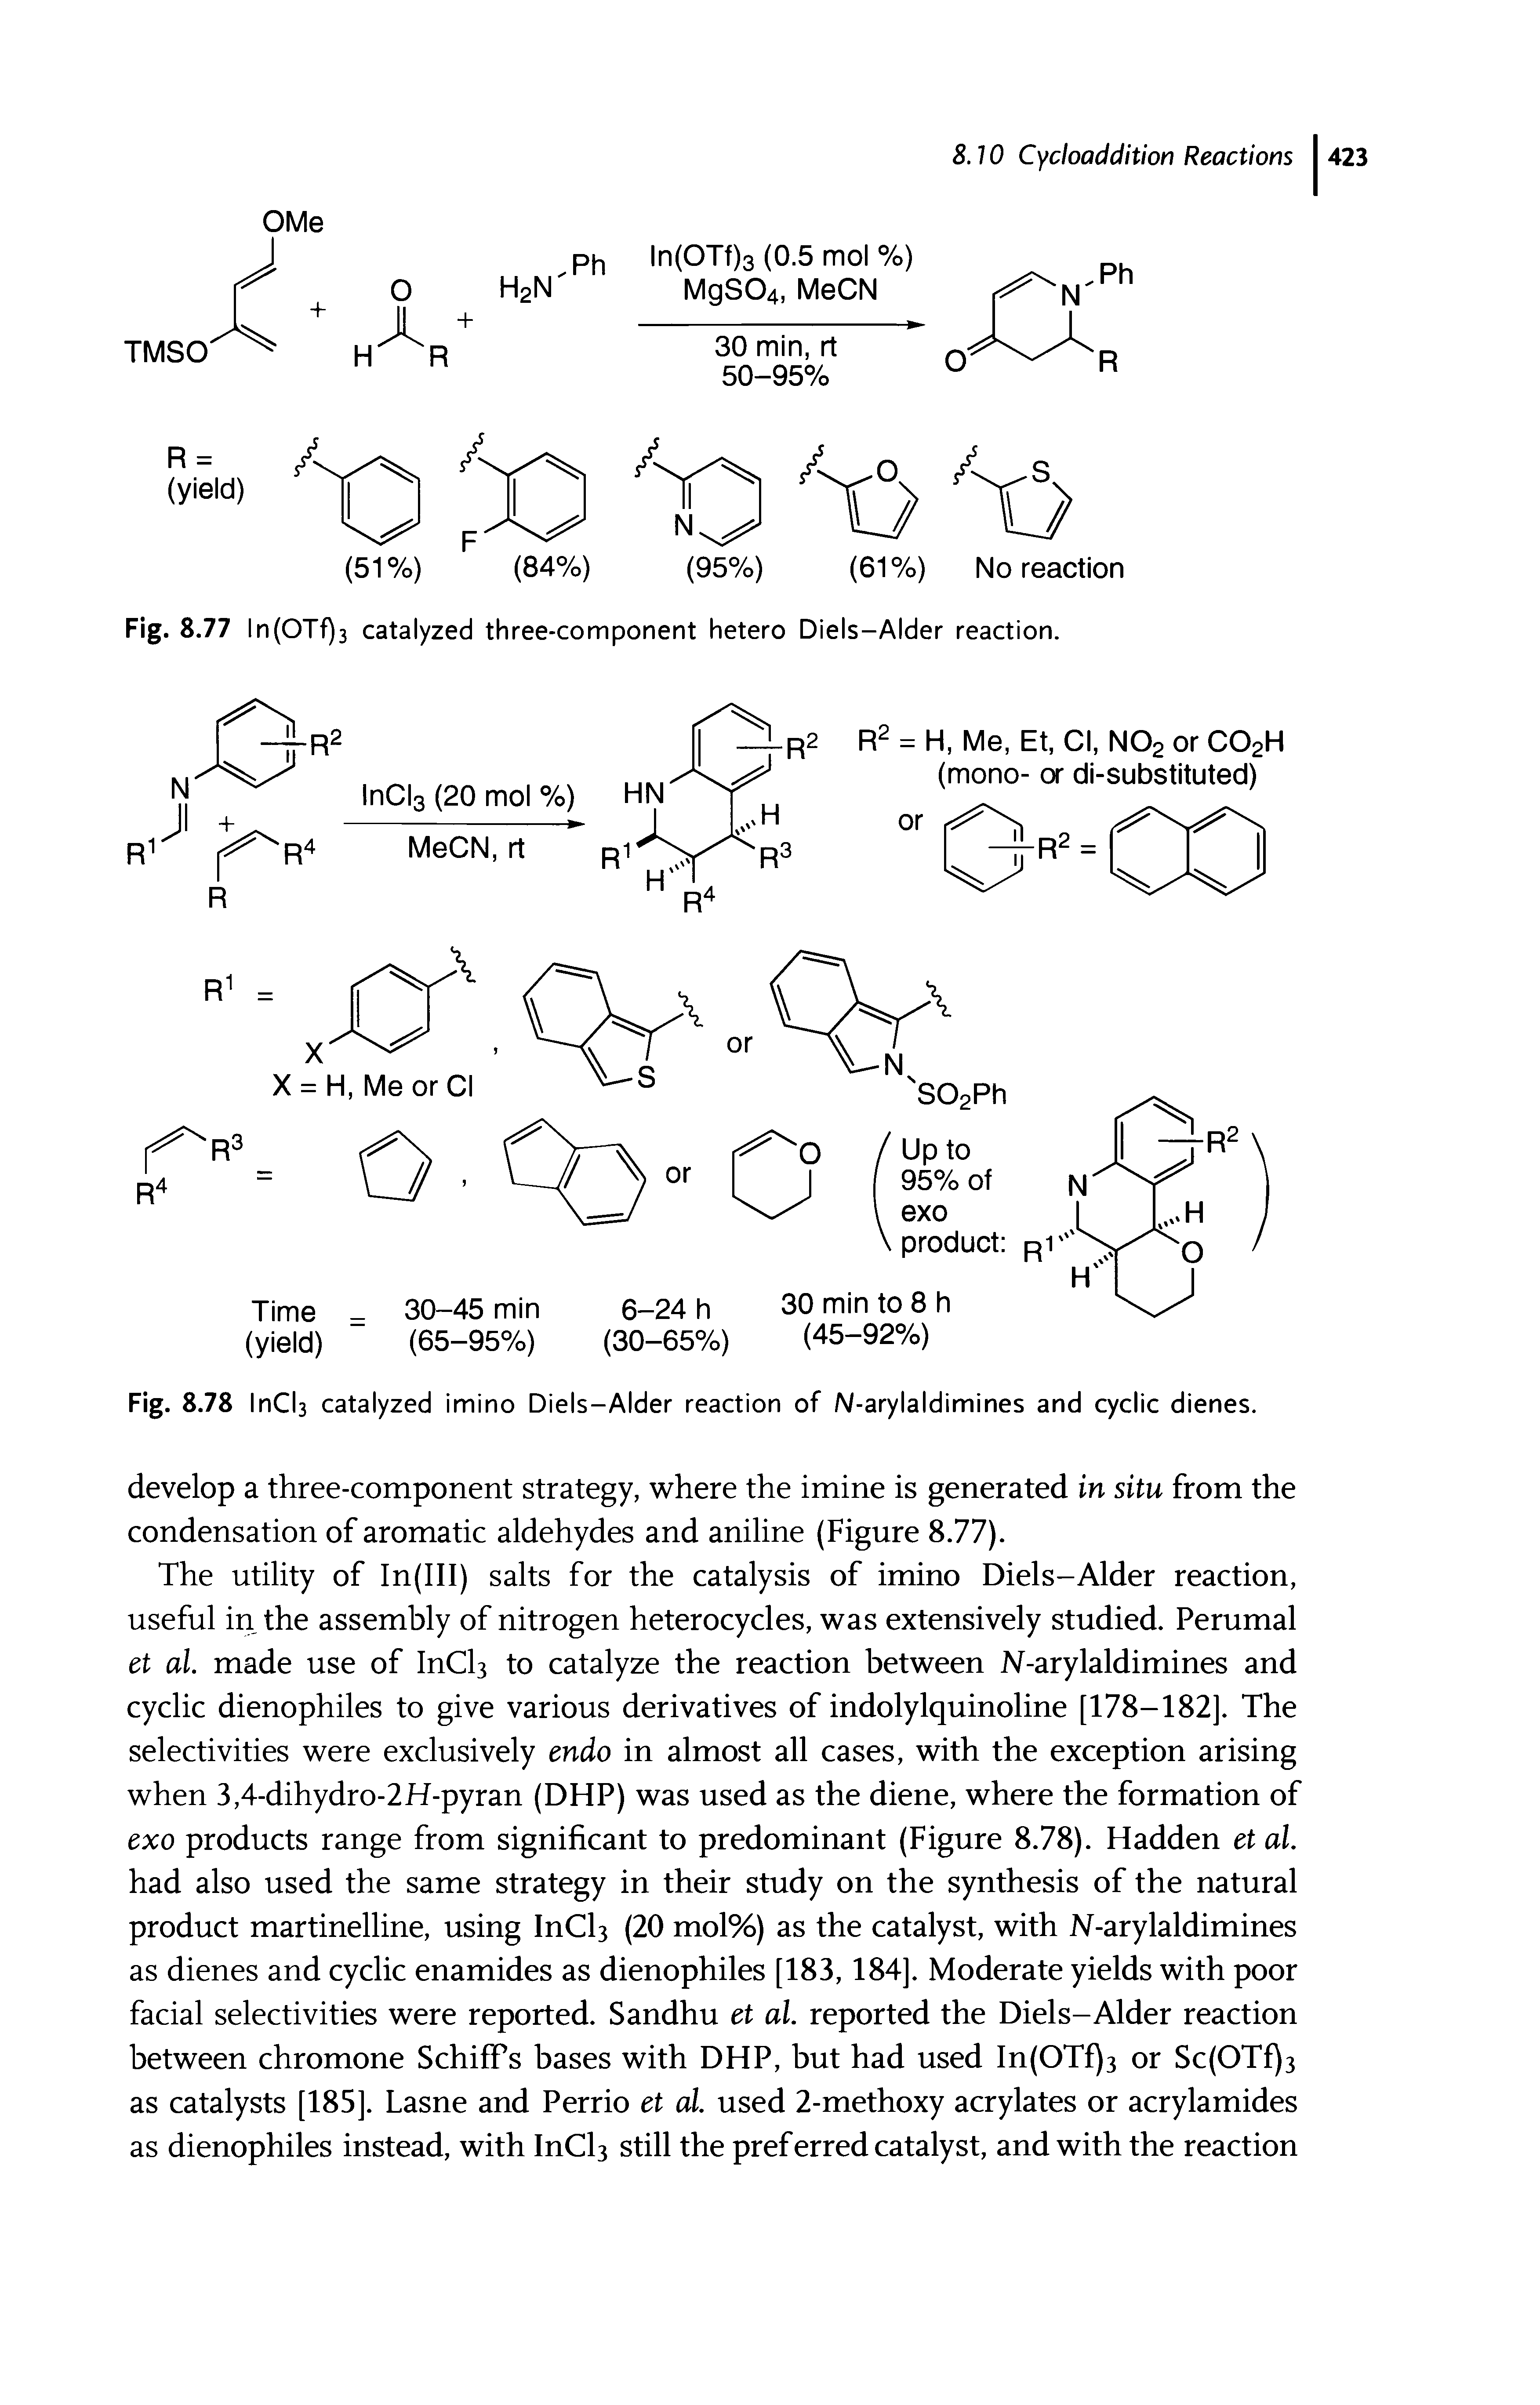 Fig. 8.78 InCb catalyzed imino Diels-Alder reaction of N-arylaldimines and cyclic dienes.